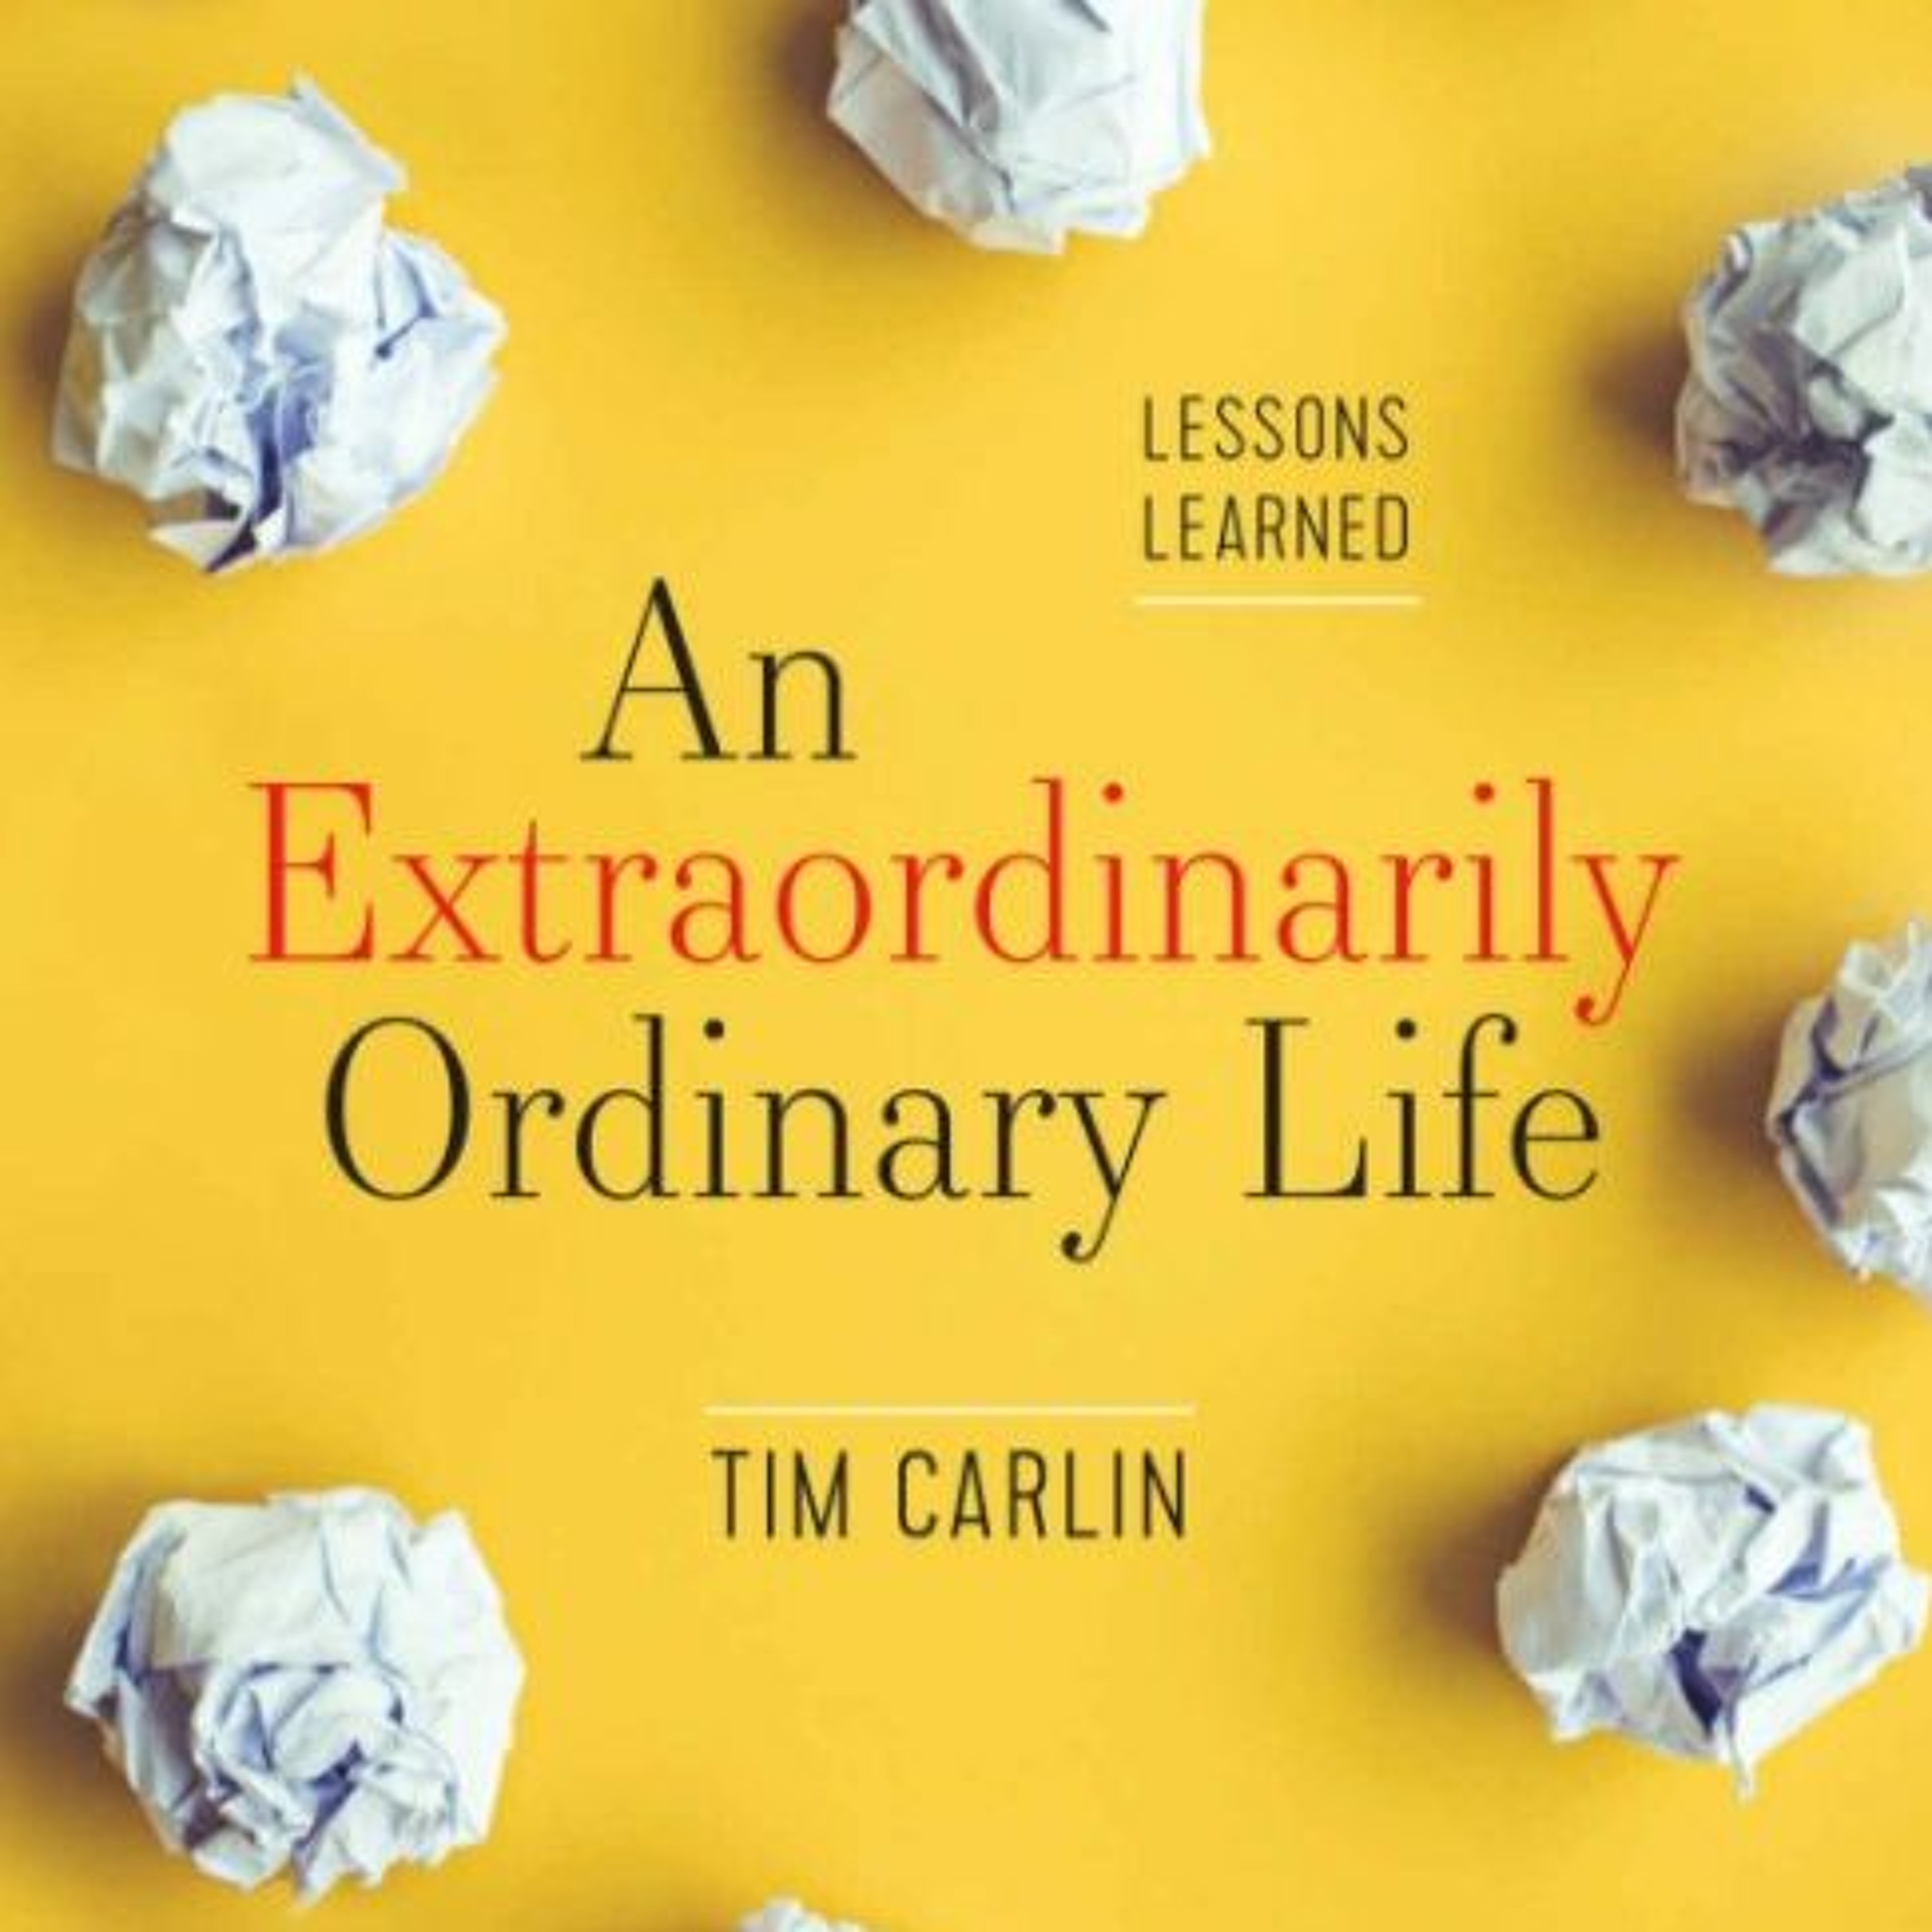 100: An Extraordinarily Ordinary Life With Tim Carlin